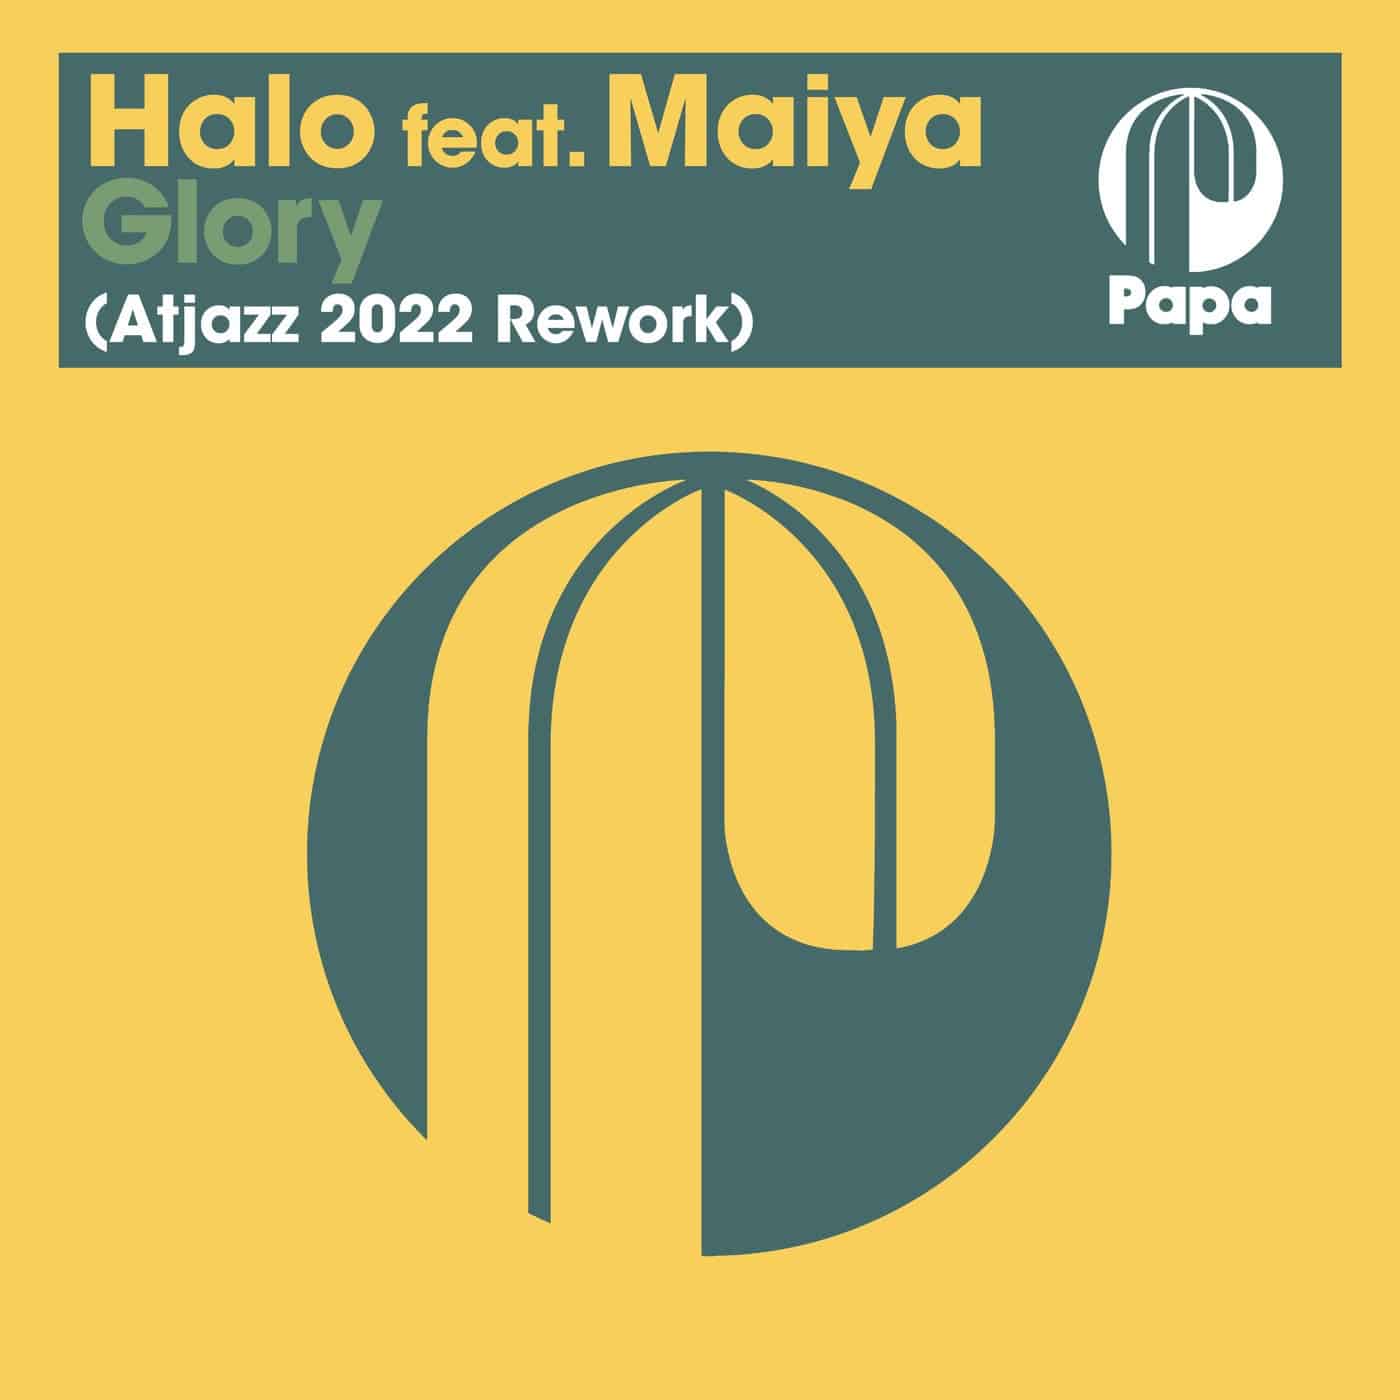 image cover: Halo, Atjazz, Maiya - Glory - Atjazz 2022 Rework / PAPA148DL